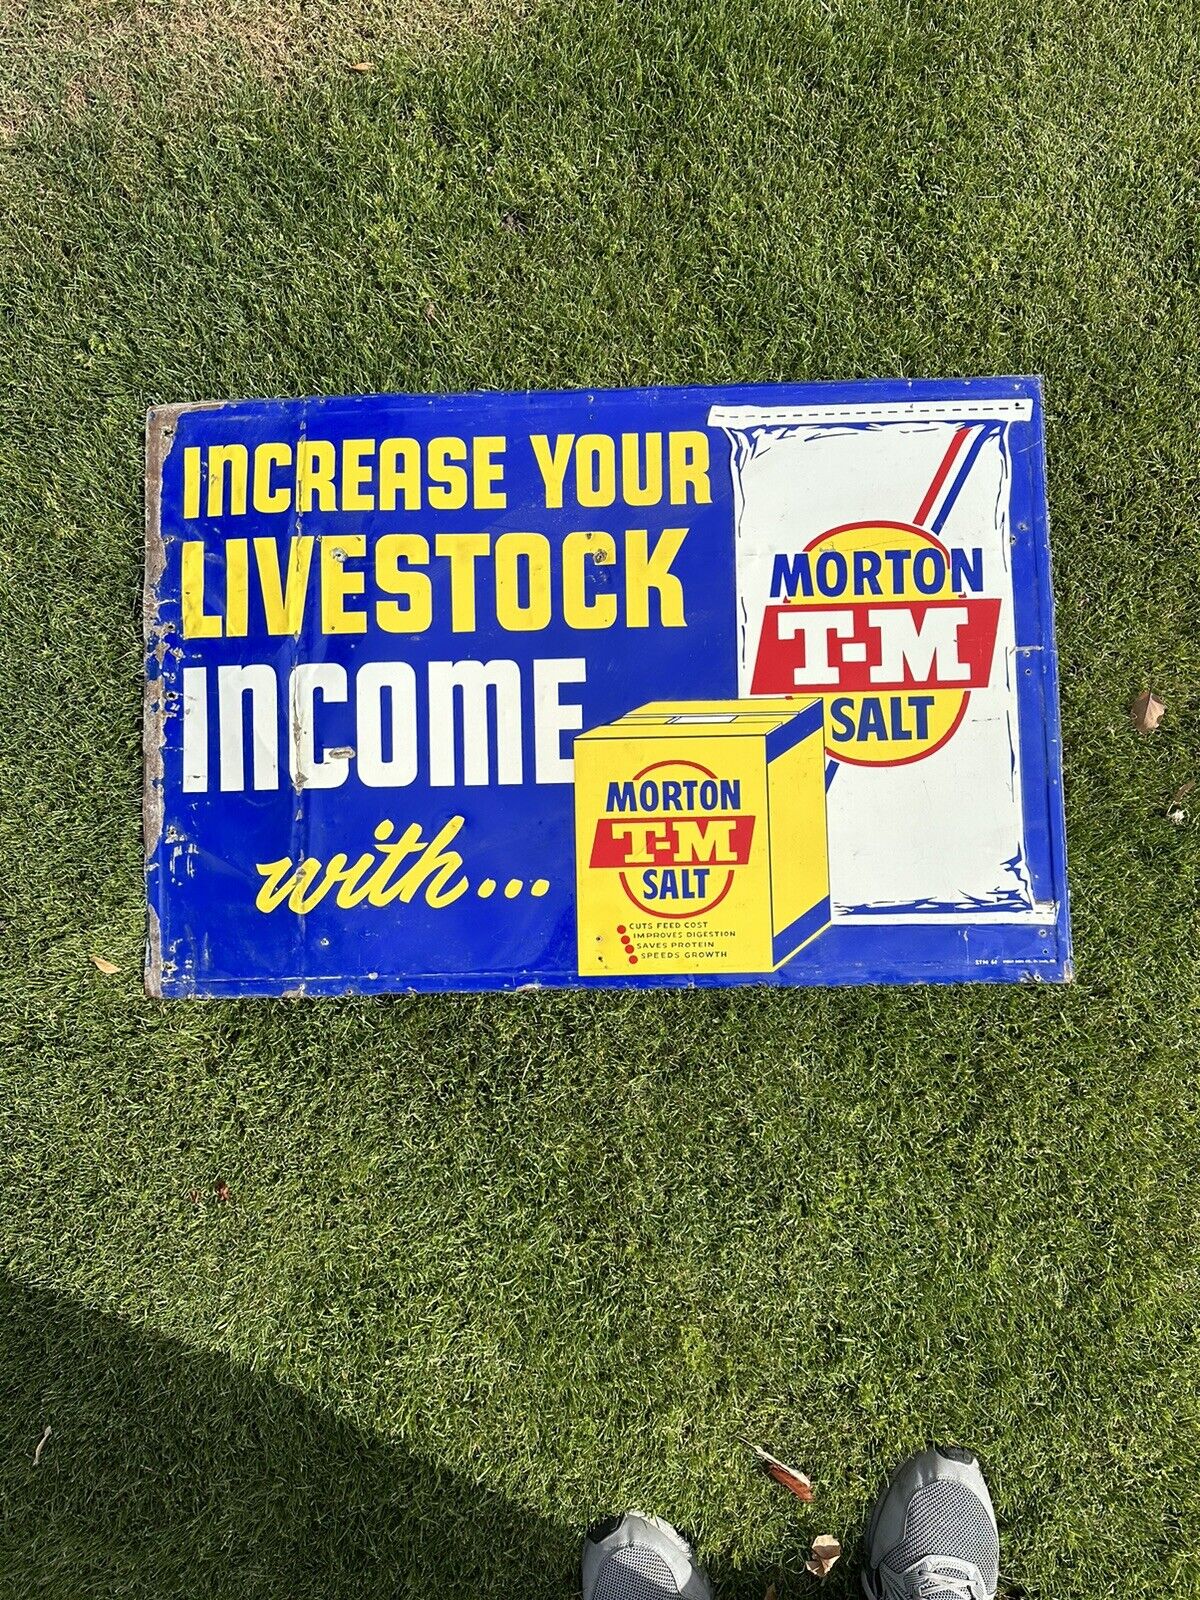 Original Vintage Morton Salt Increase Your Livestock Income W/ T-M Morton Salt